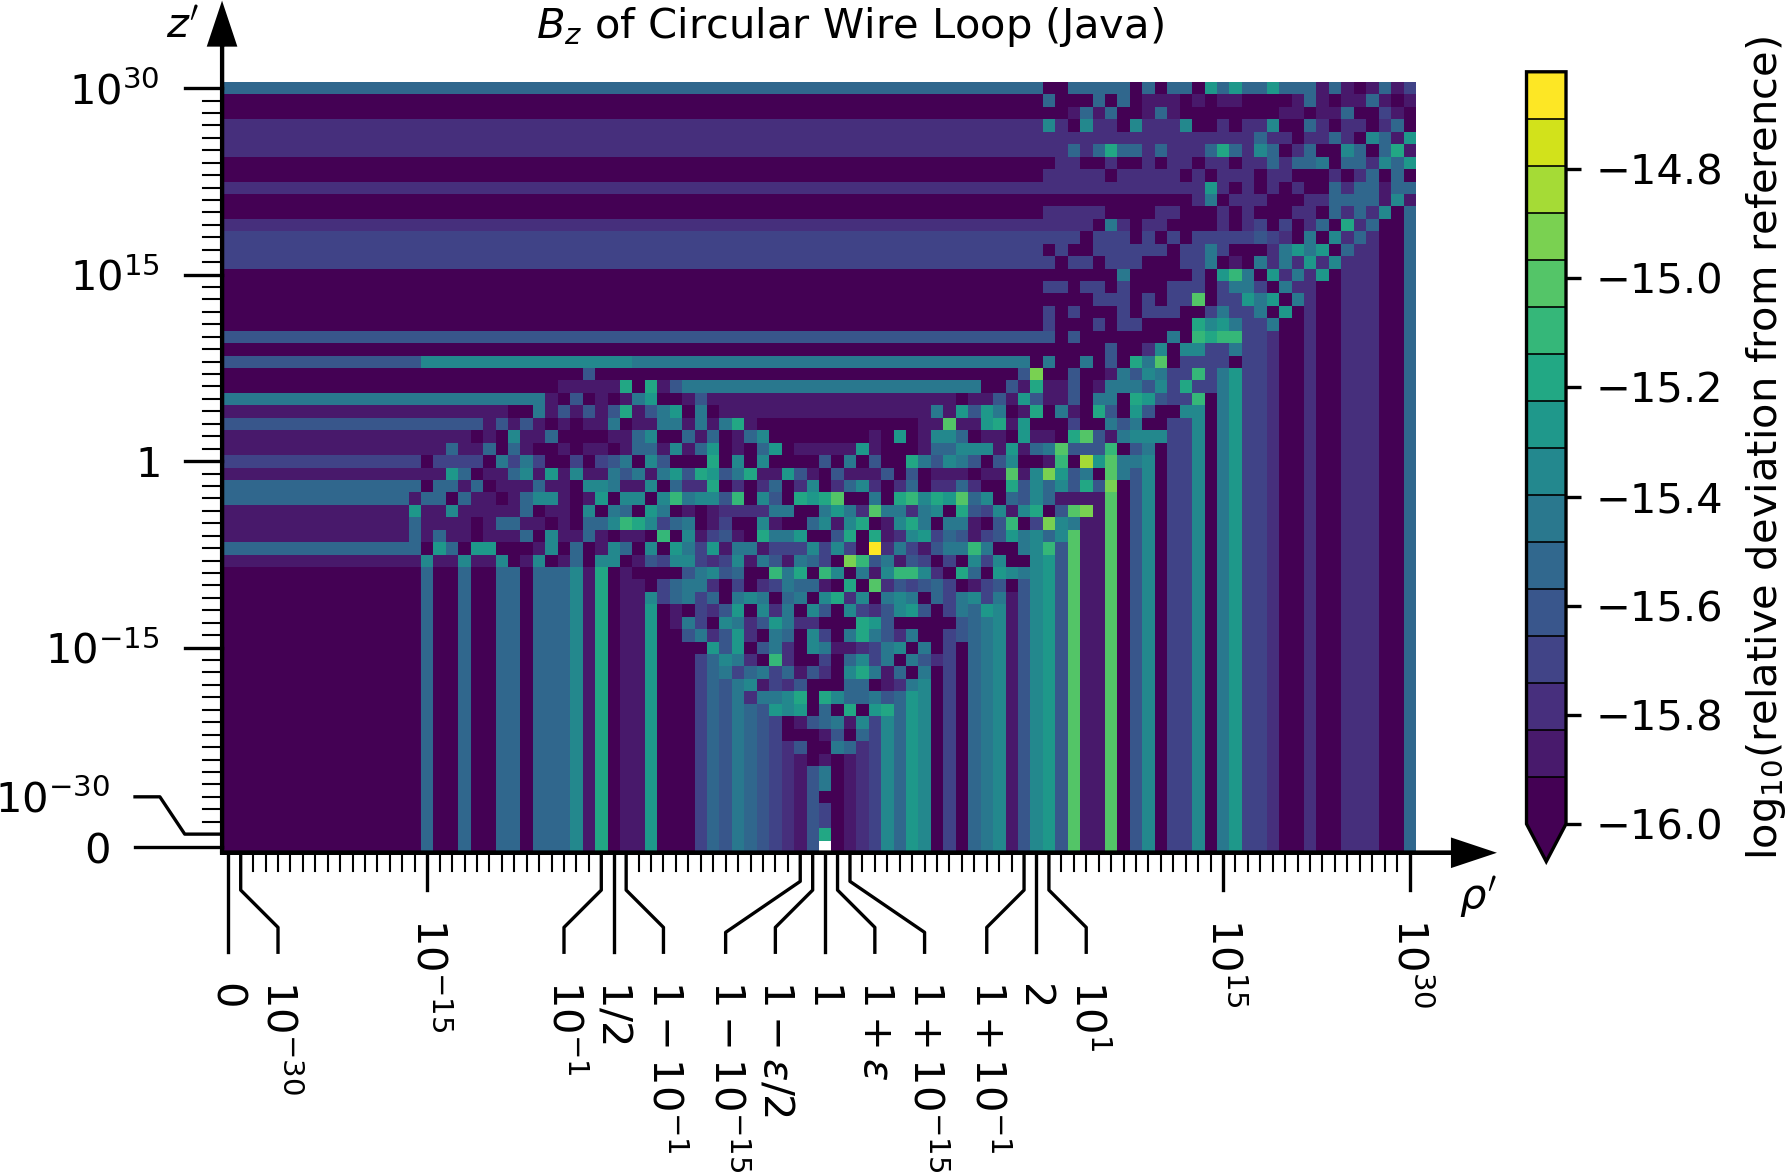 B_z of Circular Wire Loop: Java vs. reference